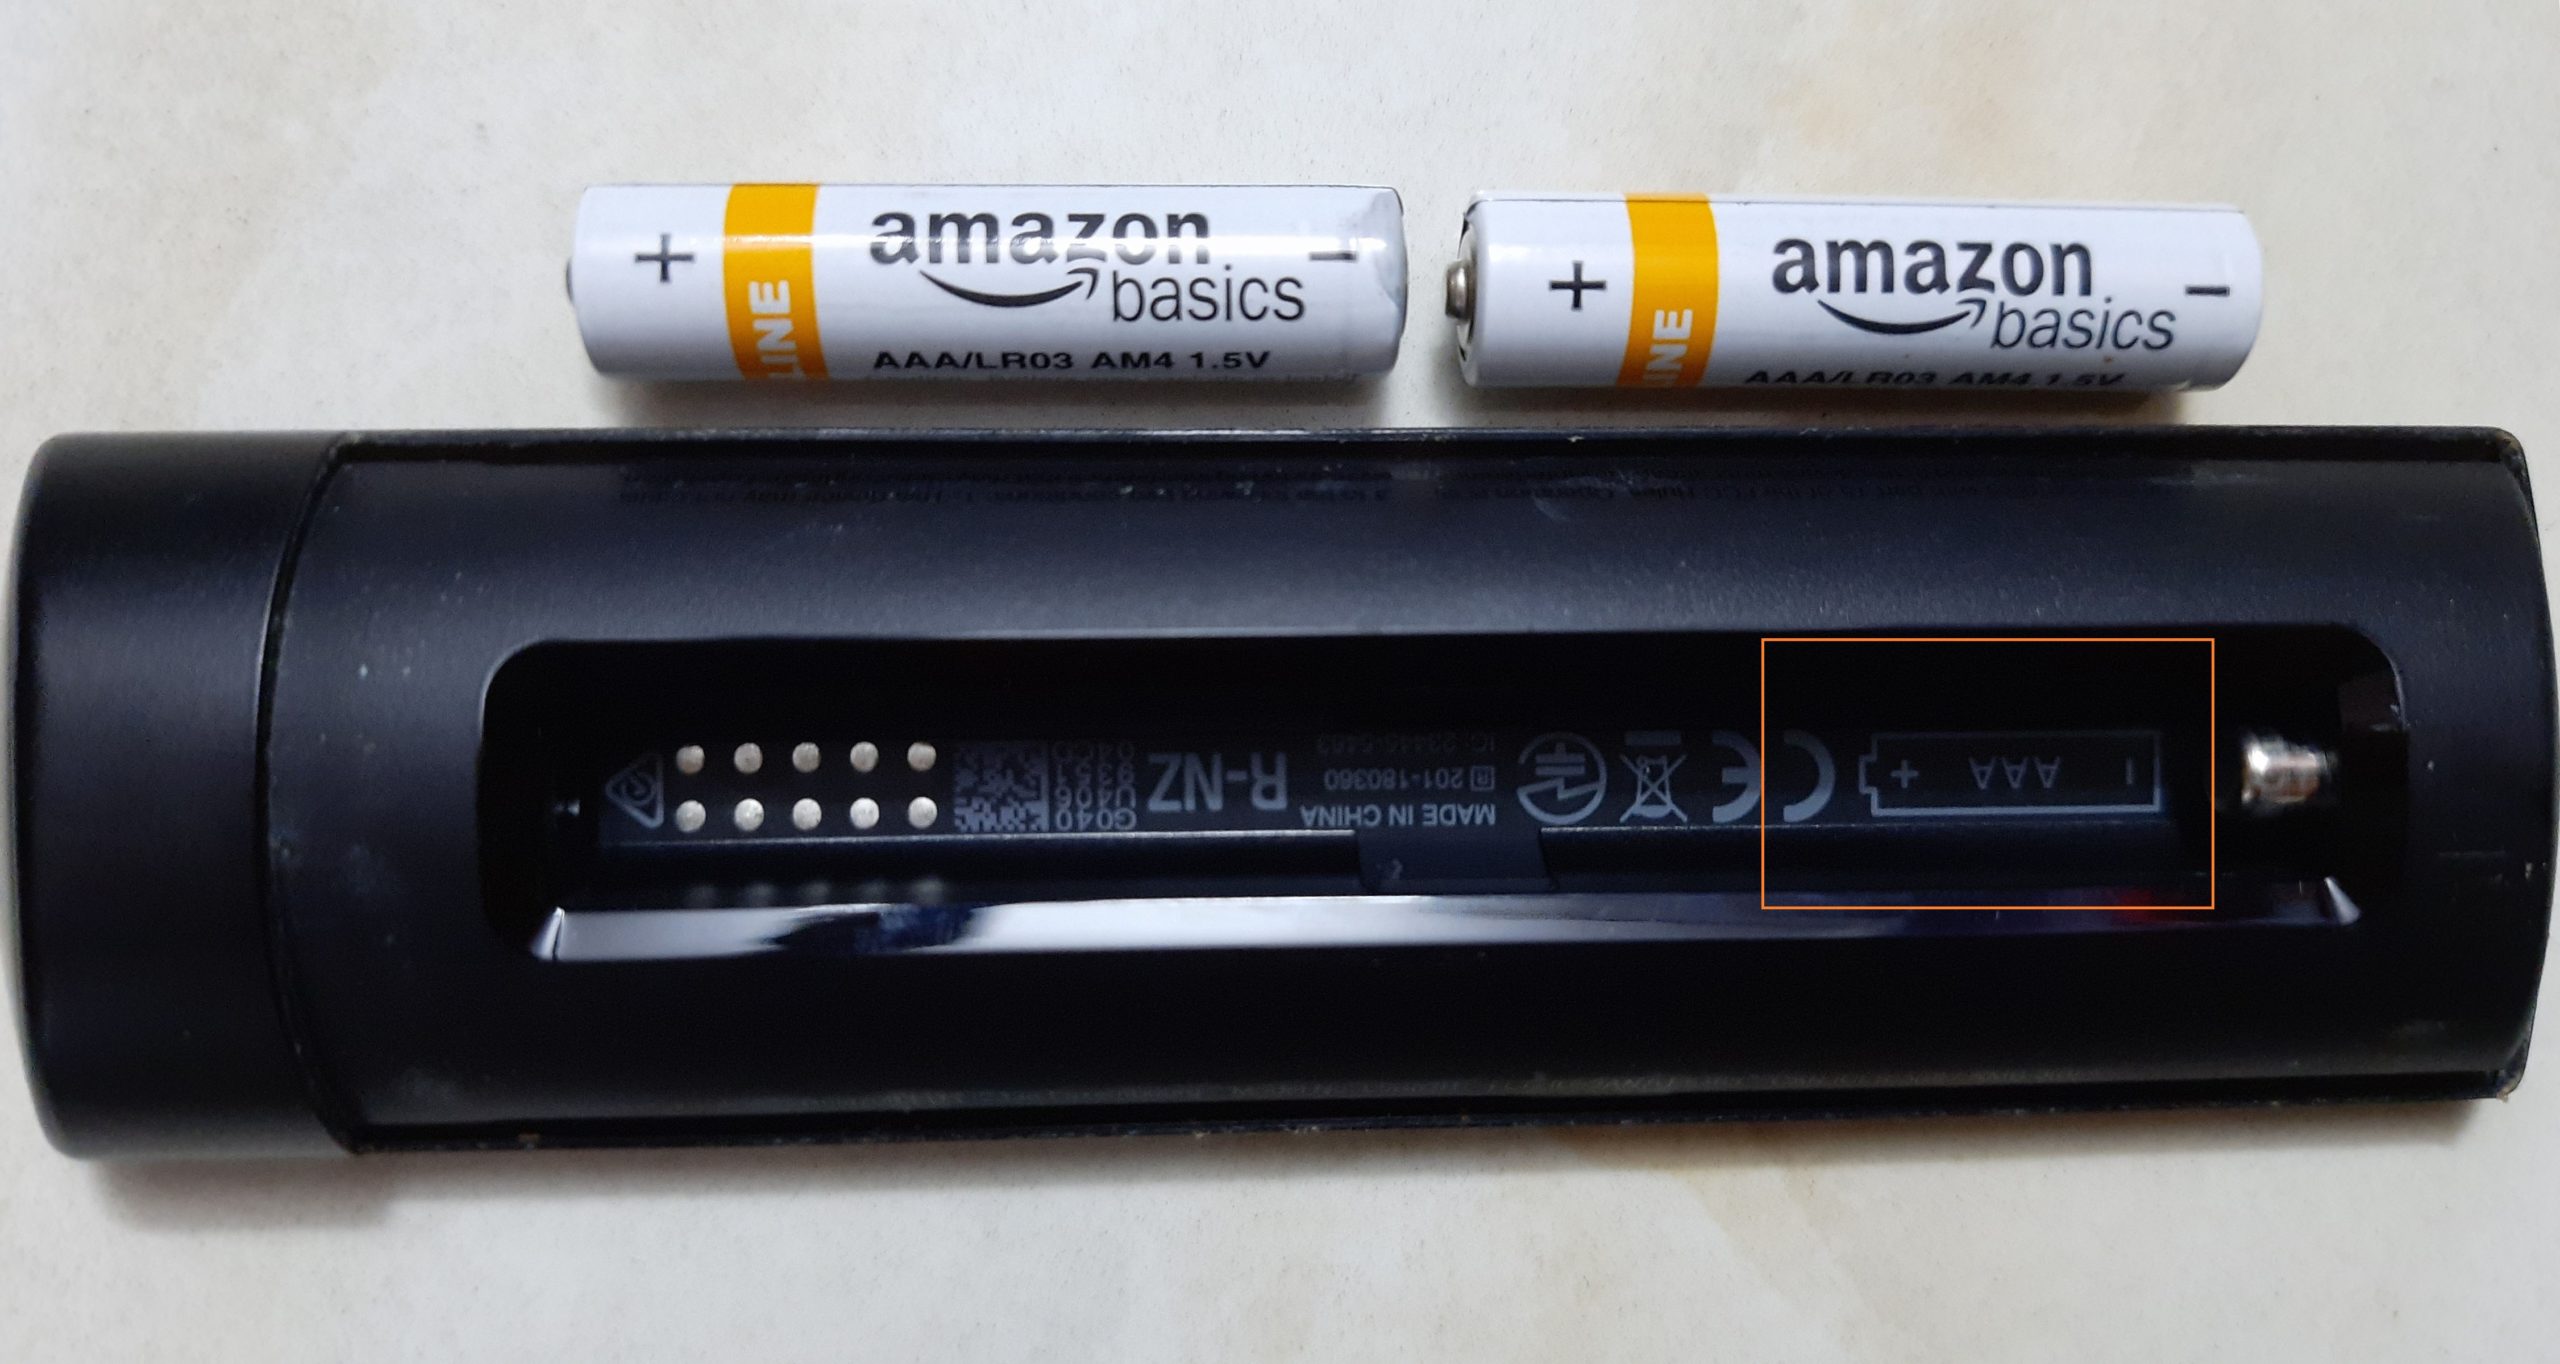 Amazon Fire Stick stopped working